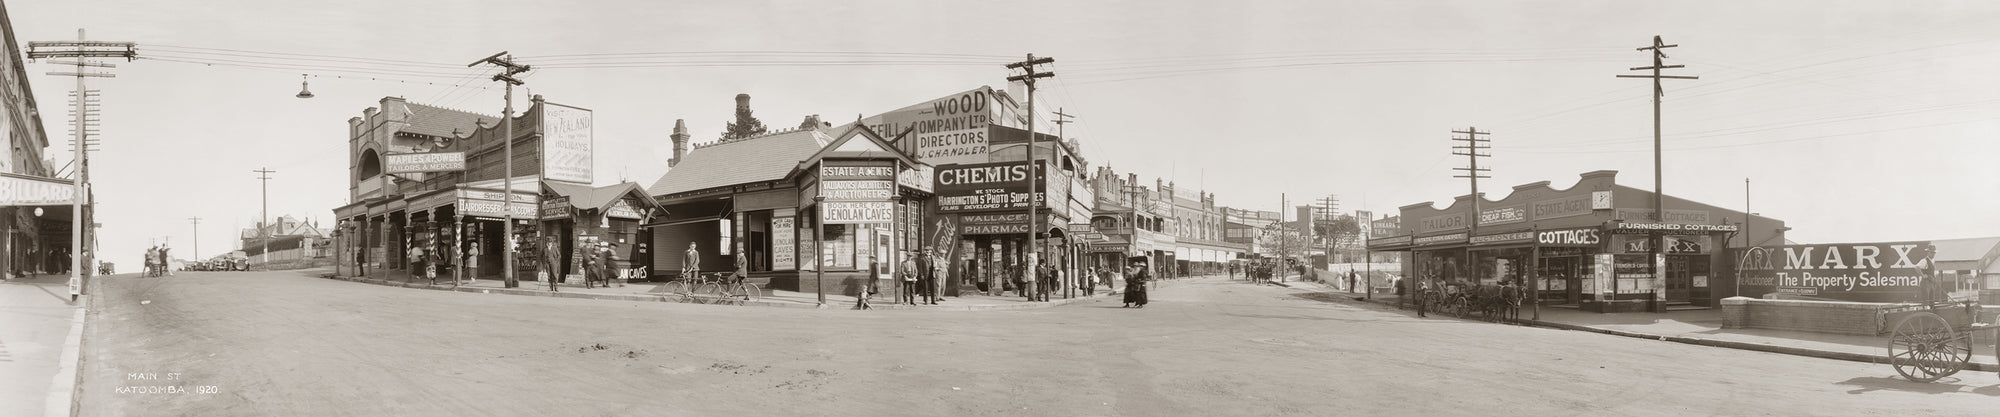 Katoomba Street and Bathurst Road Junction, Katoomba NSW Australia 1920